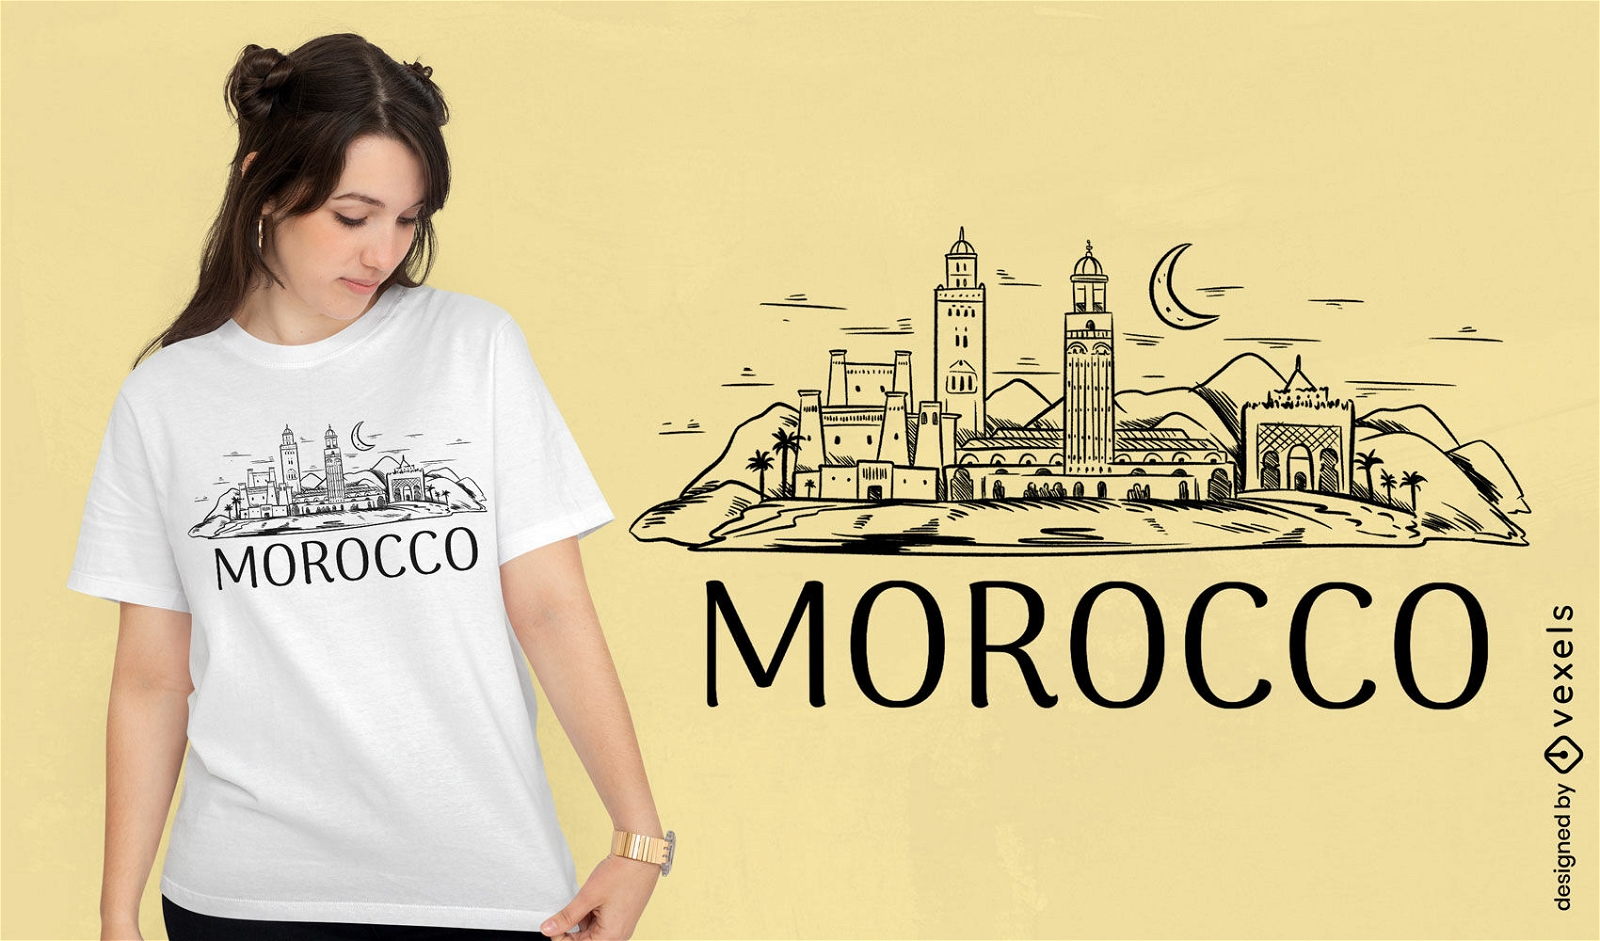 Morocco buildings skyline t-shirt design